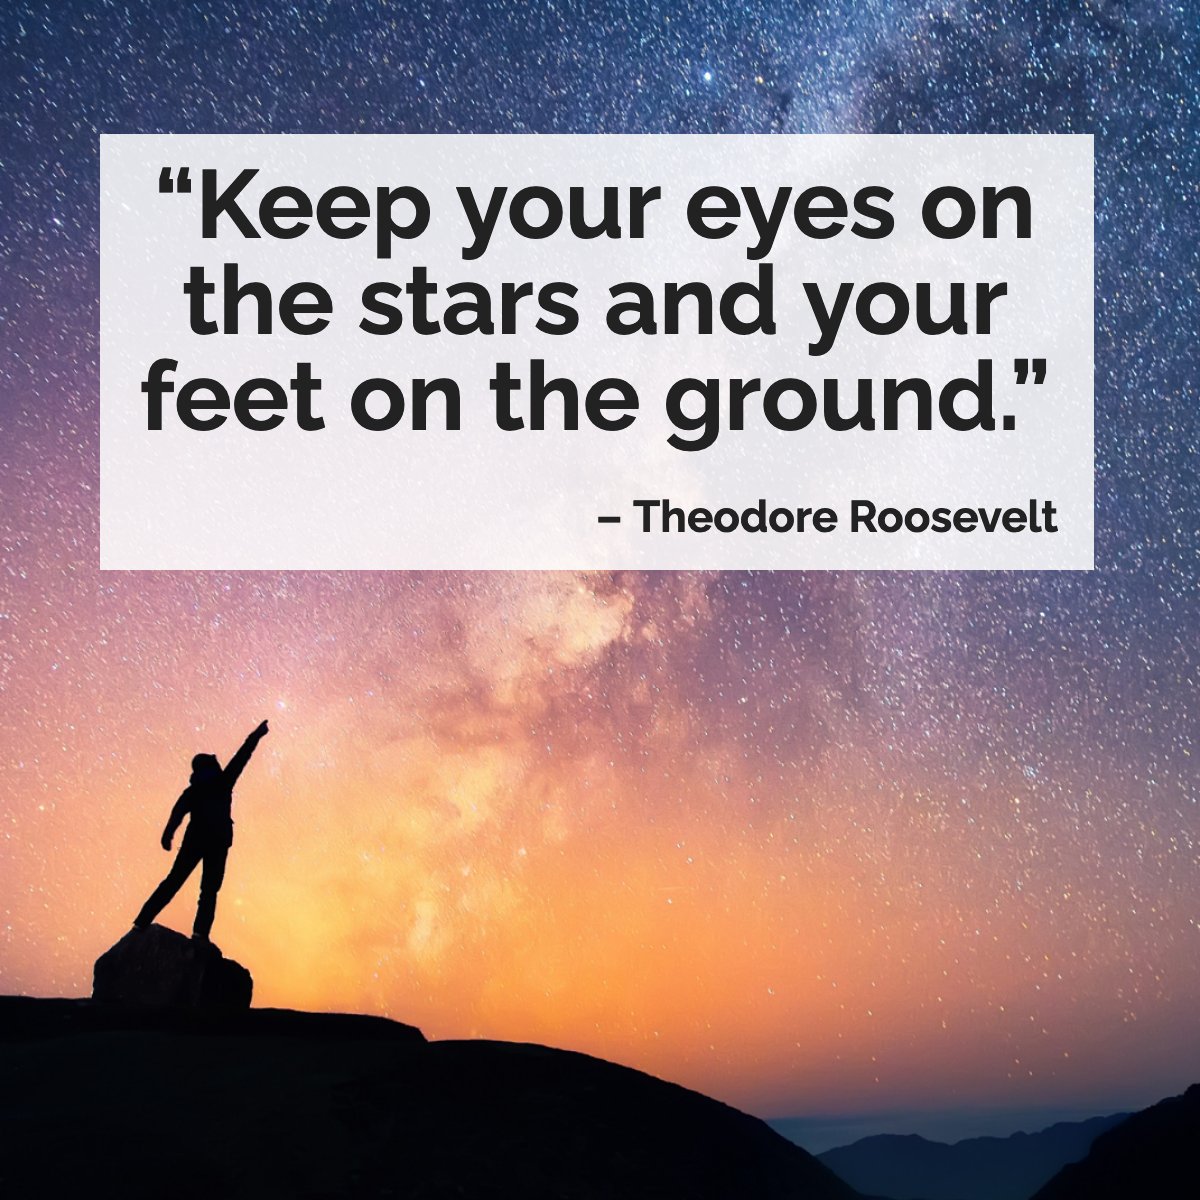 Dream big but stay grounded, that's the key ✨

 #wisdomquote #wisdomoftheday #quotegram #quoteoftheday  #theodoreroosevelt